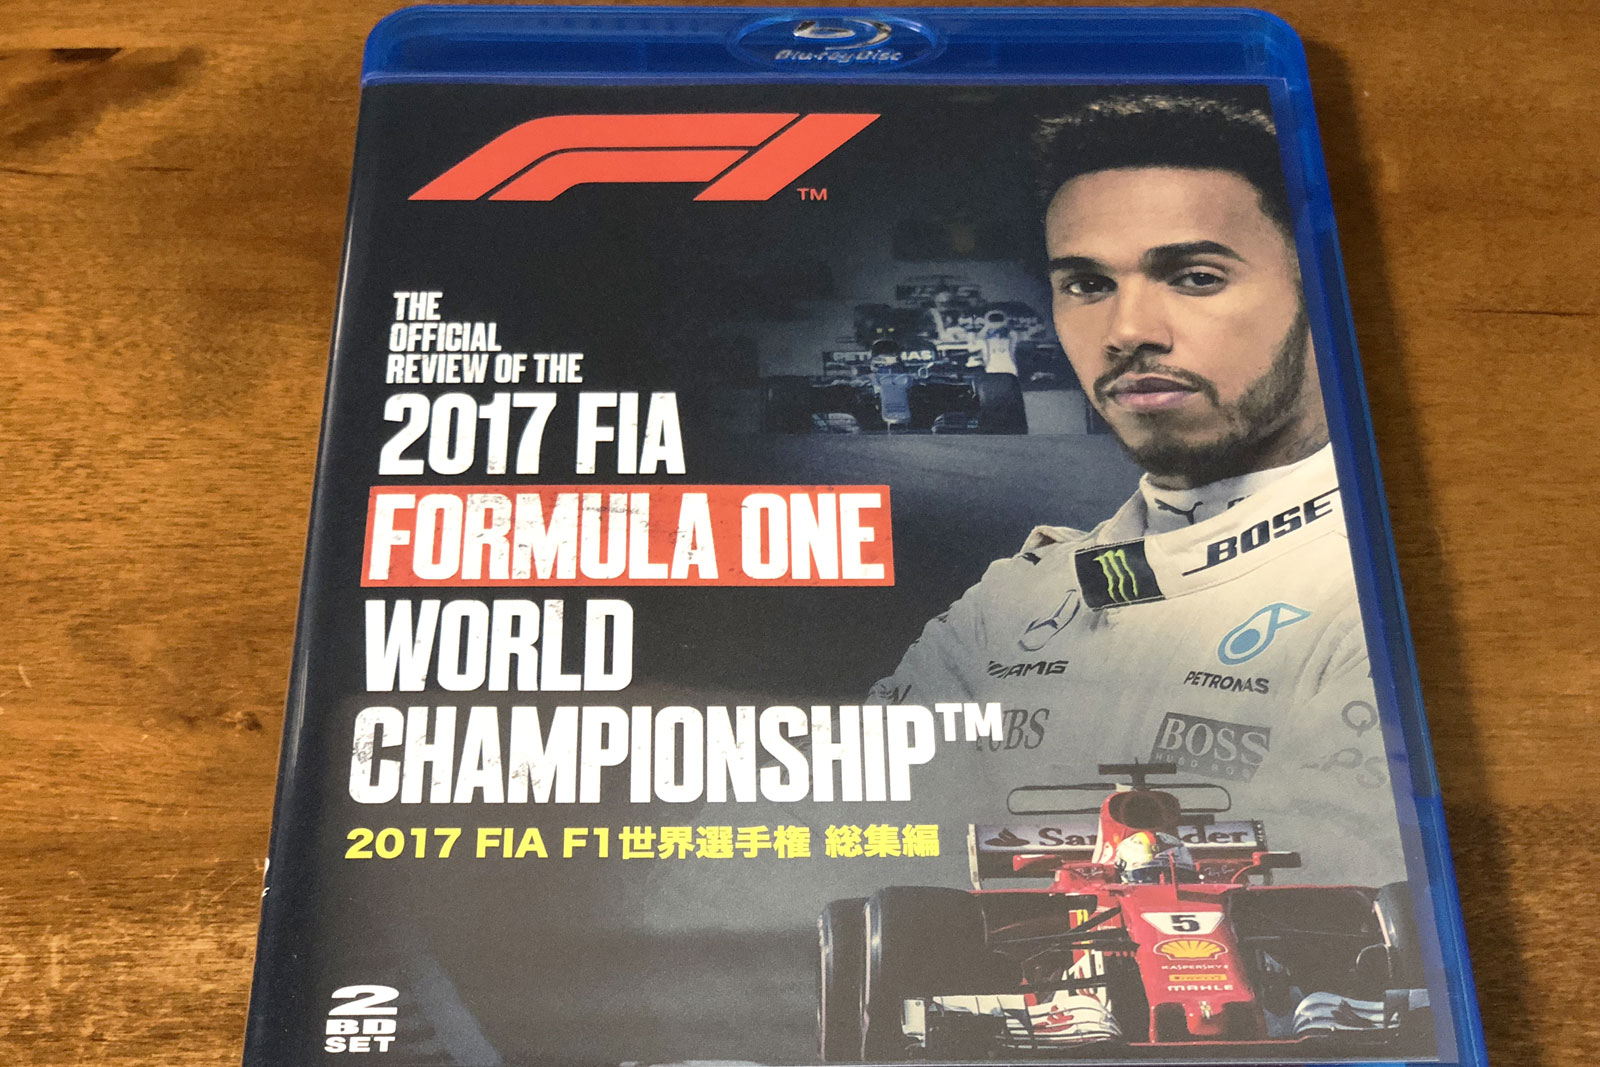 【F1物欲番長】『2017 F1世界選手権 総集編 ブルーレイ』の誠意って何かね?の巻